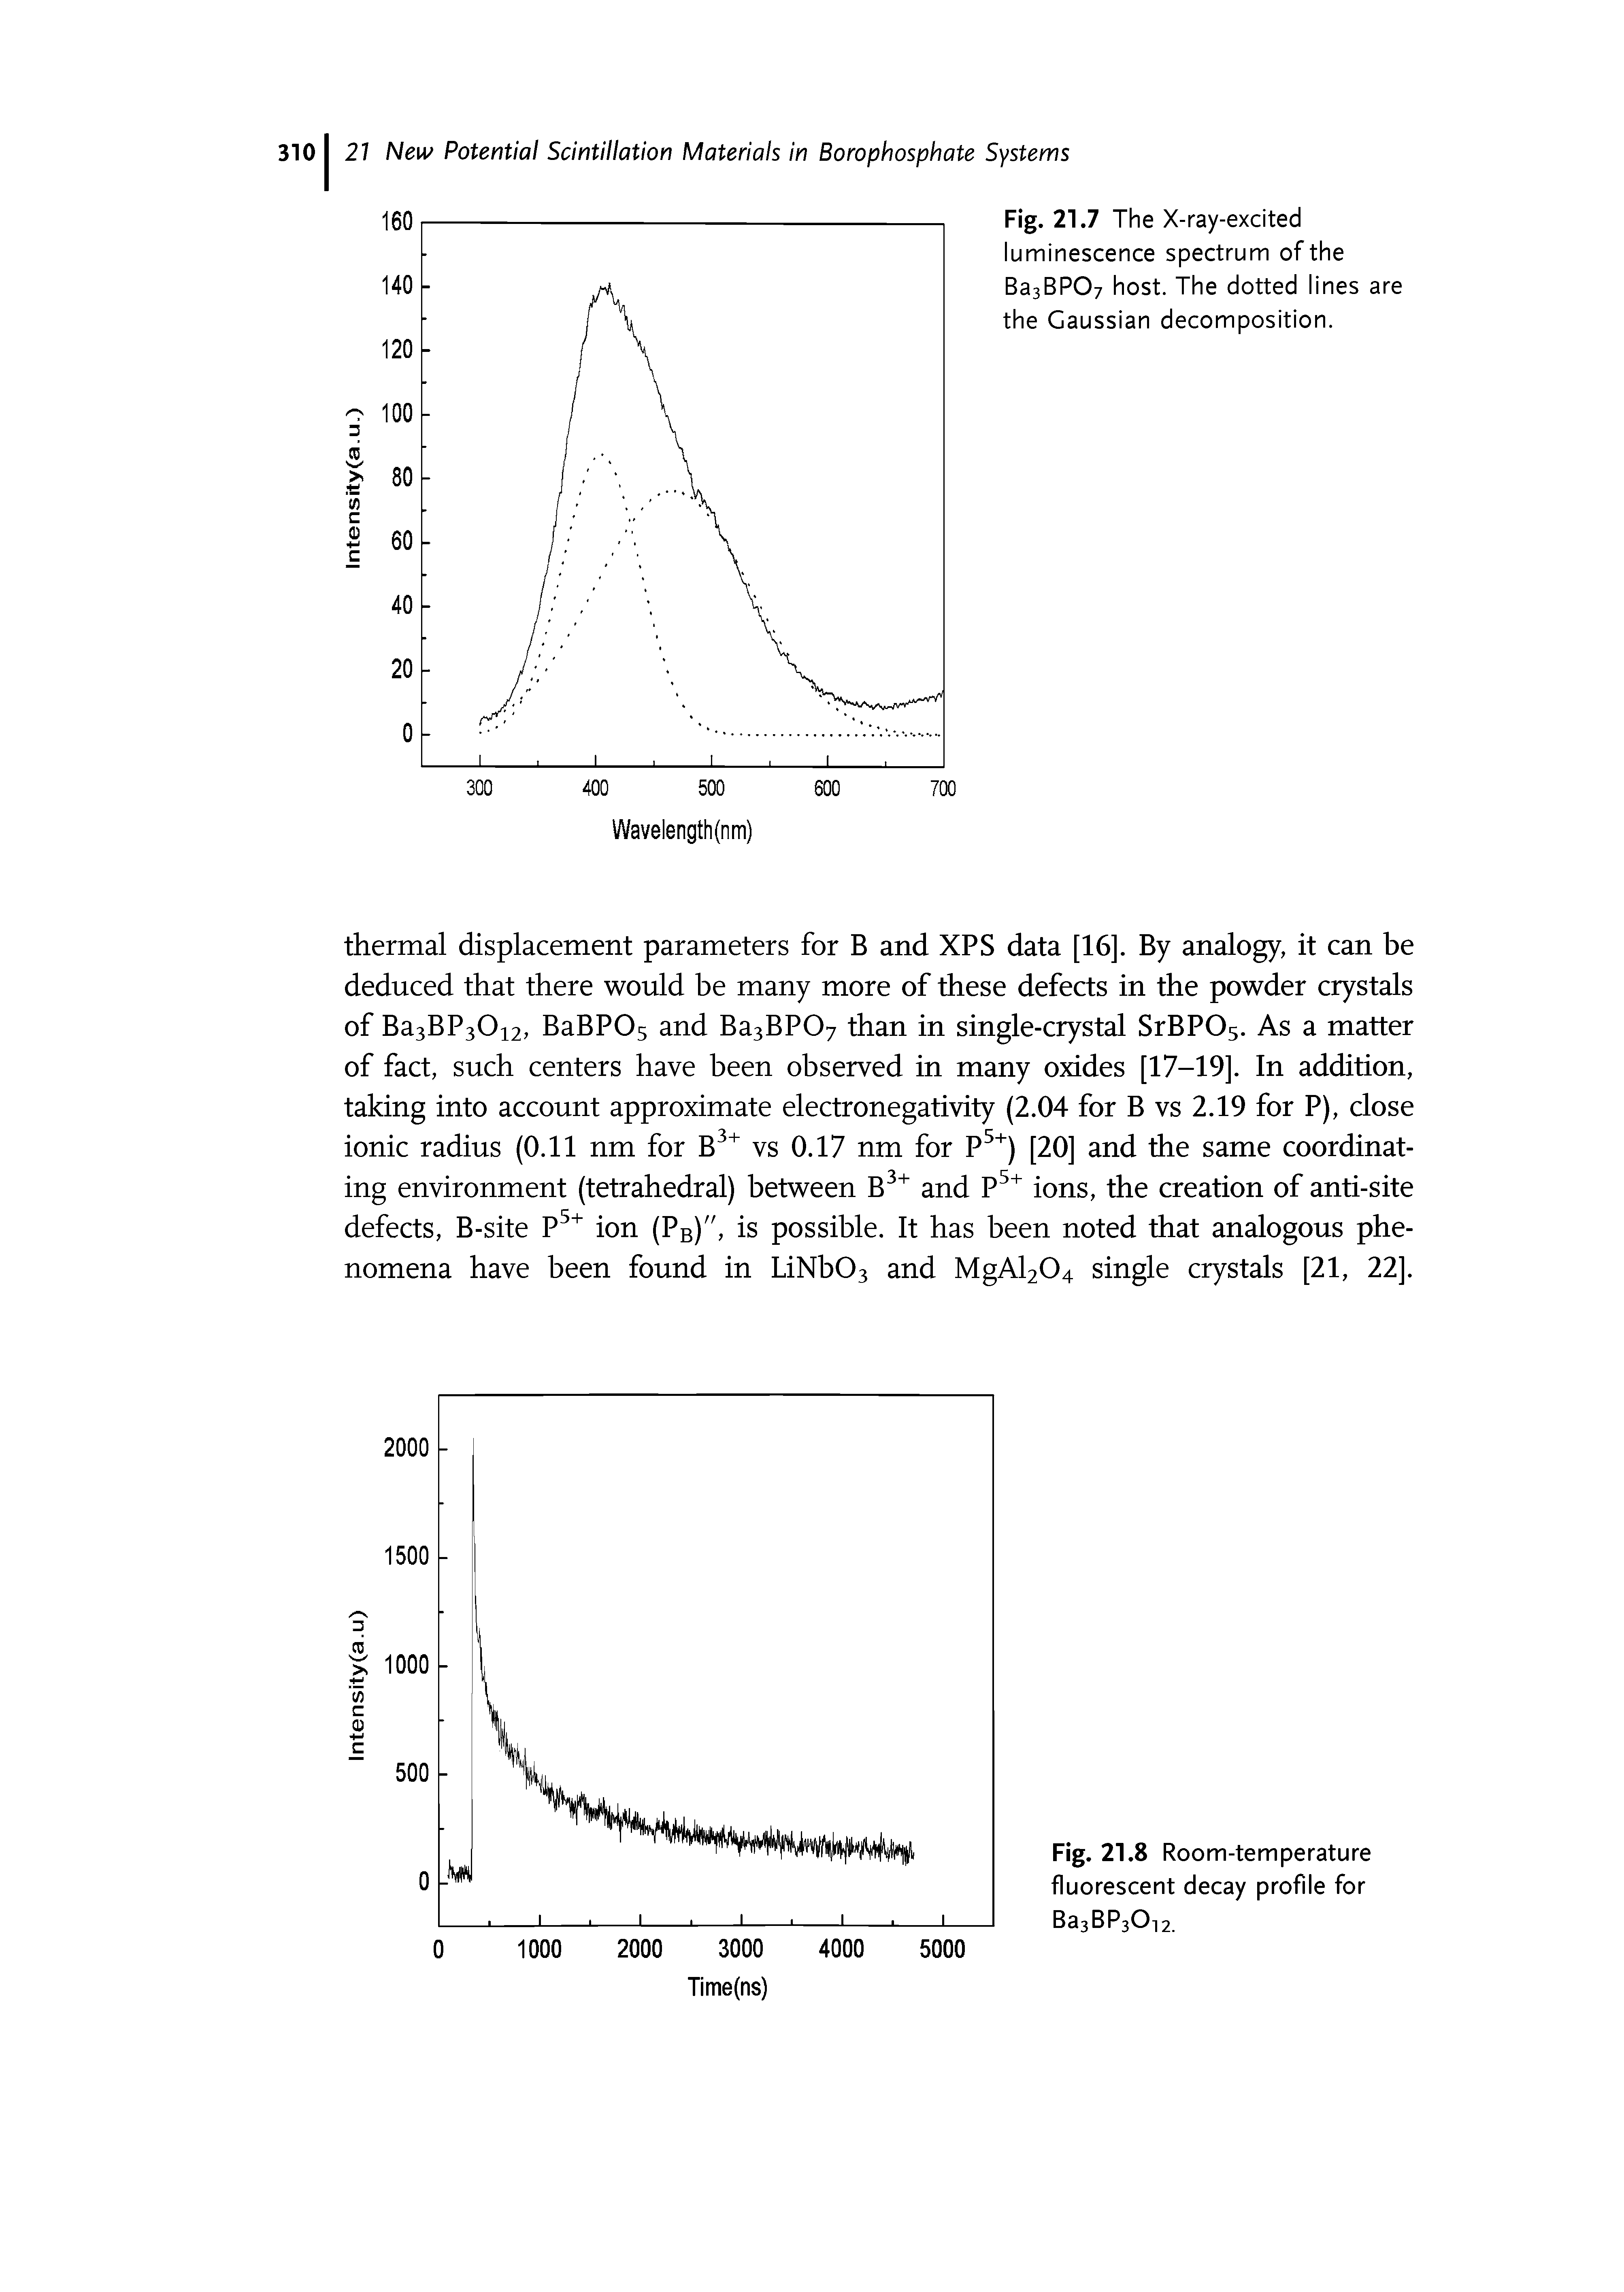 Fig. 21.8 Room-temperature fluorescent decay profile for Ba3BP30- 2.